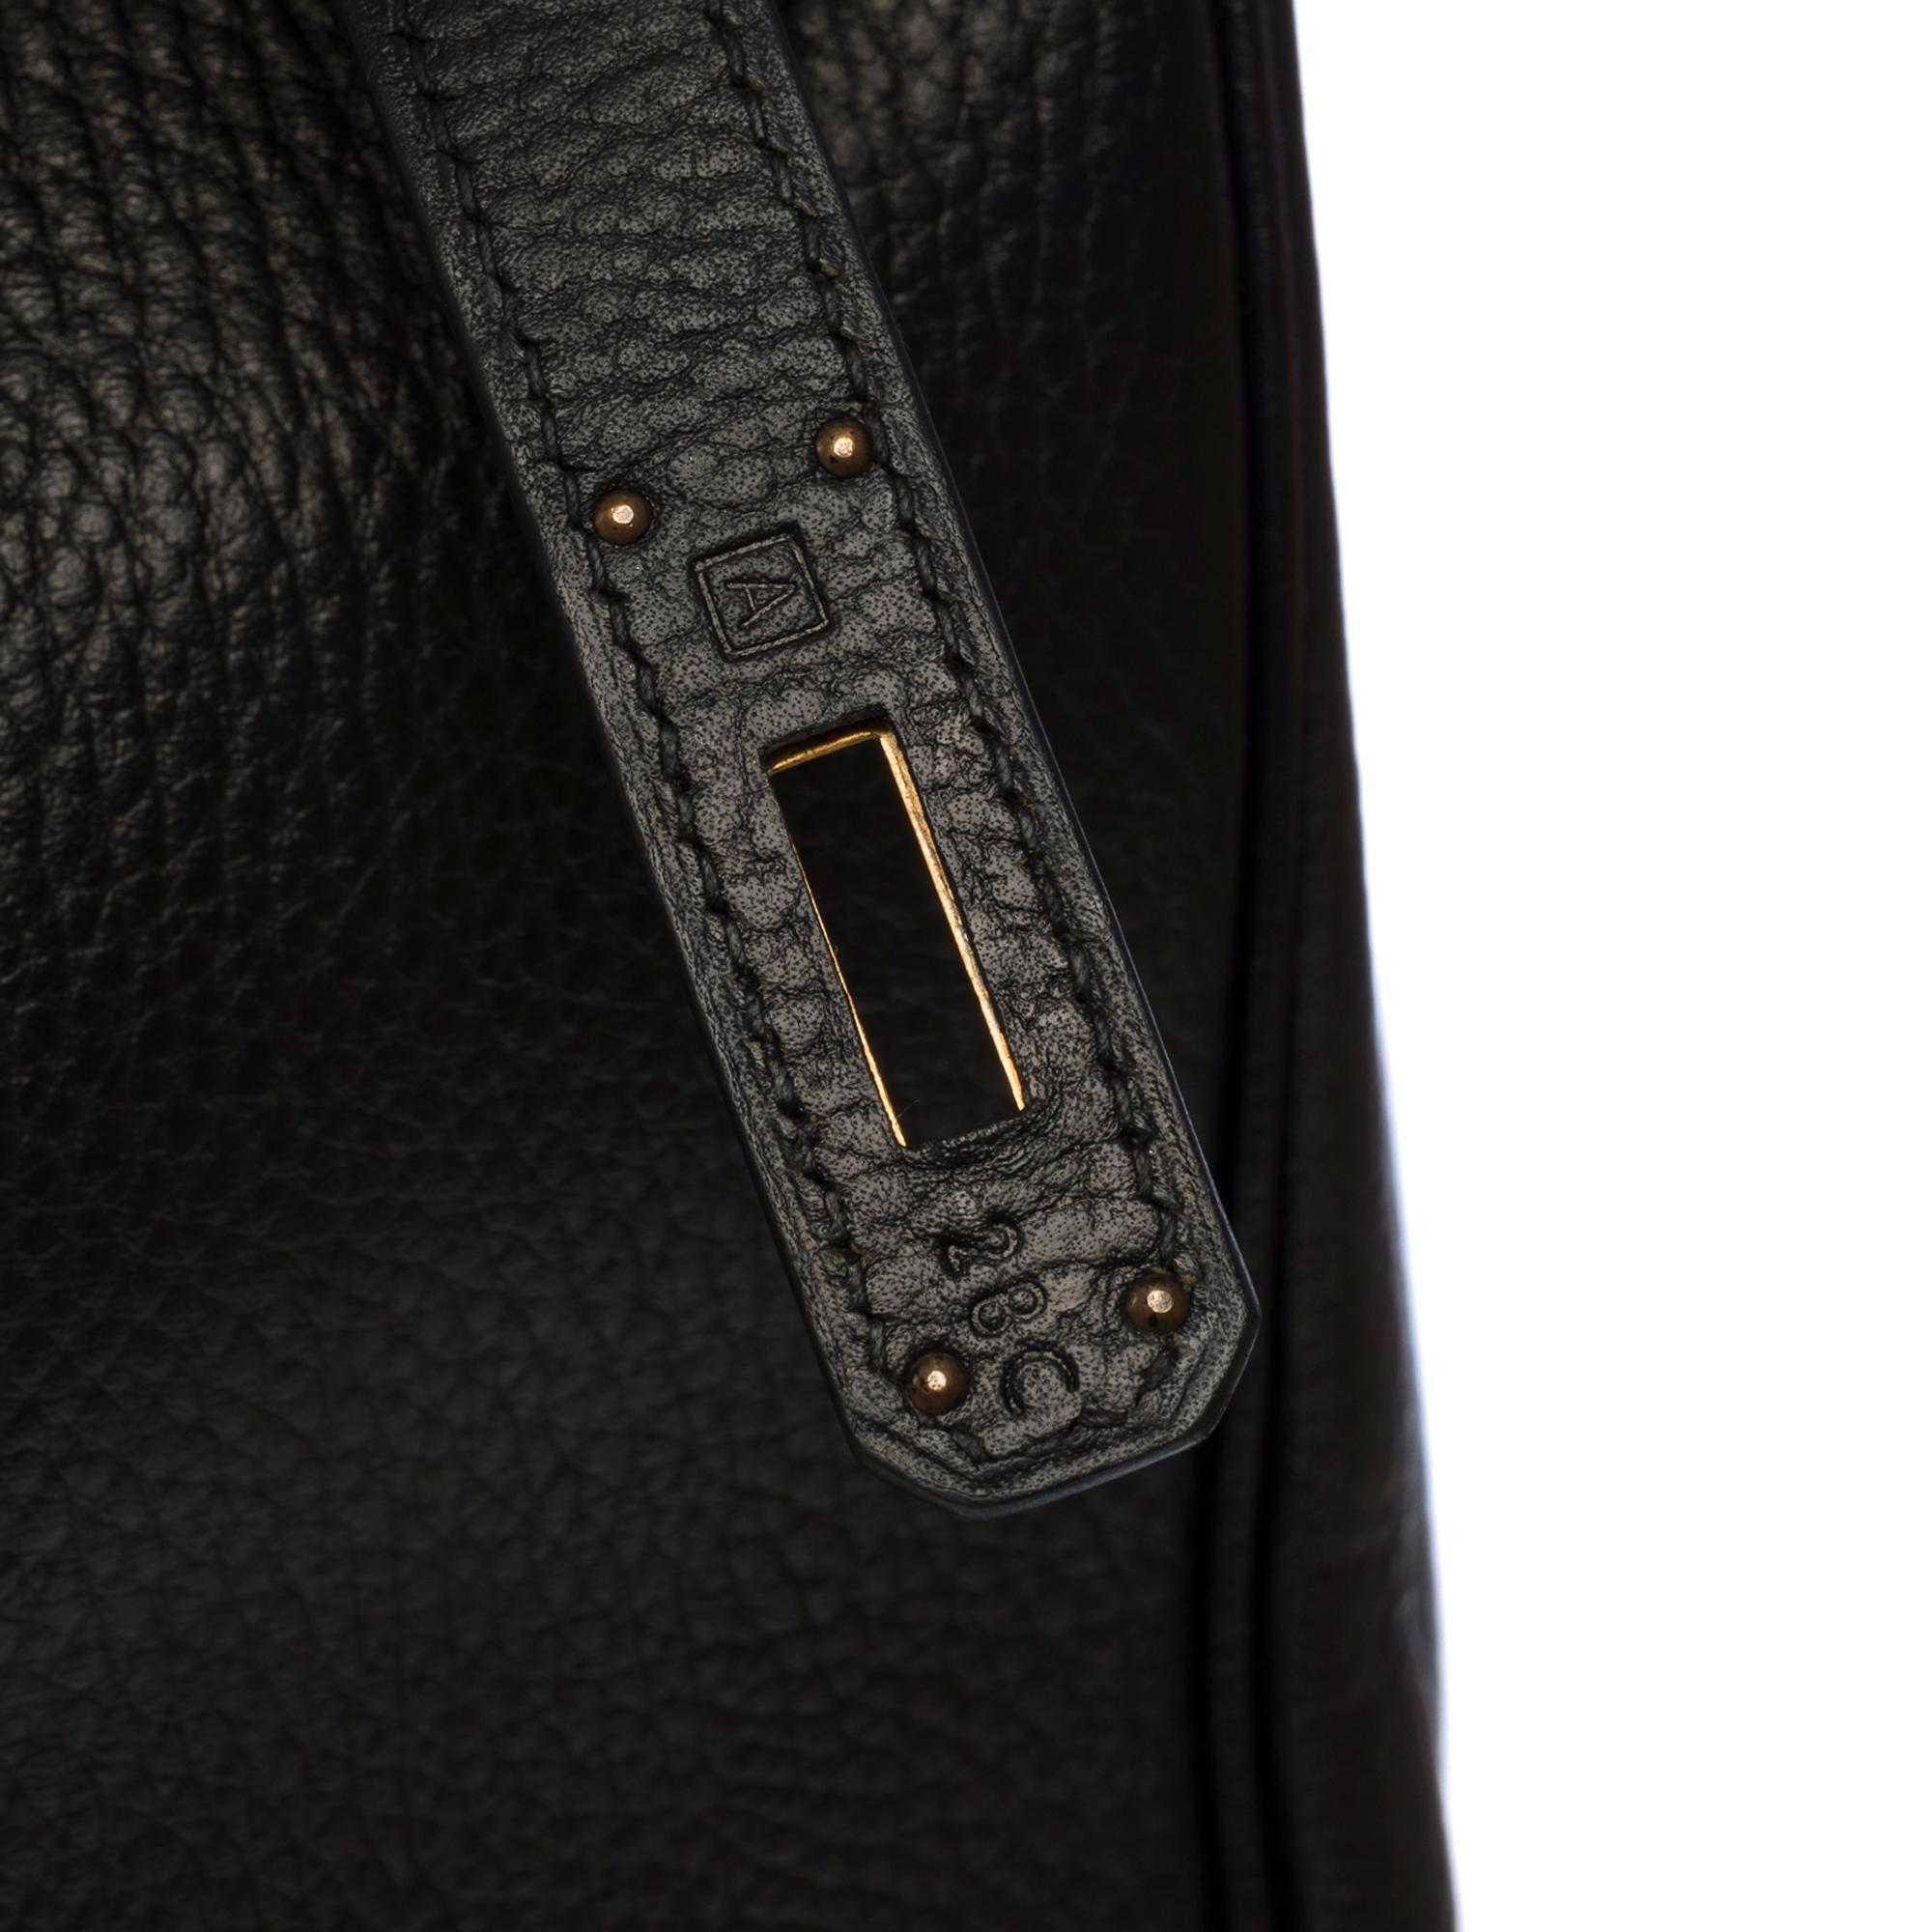 Classy Hermes Birkin 40cm handbag in Black Fjord leather, GHW 2